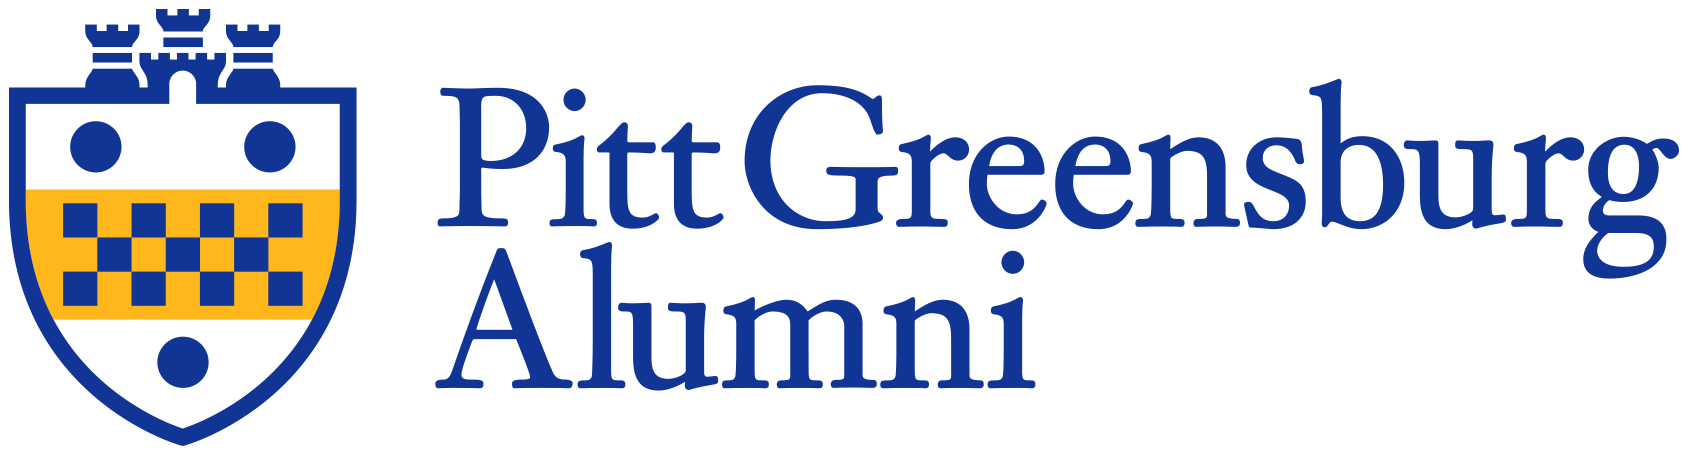 Pitt-Greensburg Alumni Association logo